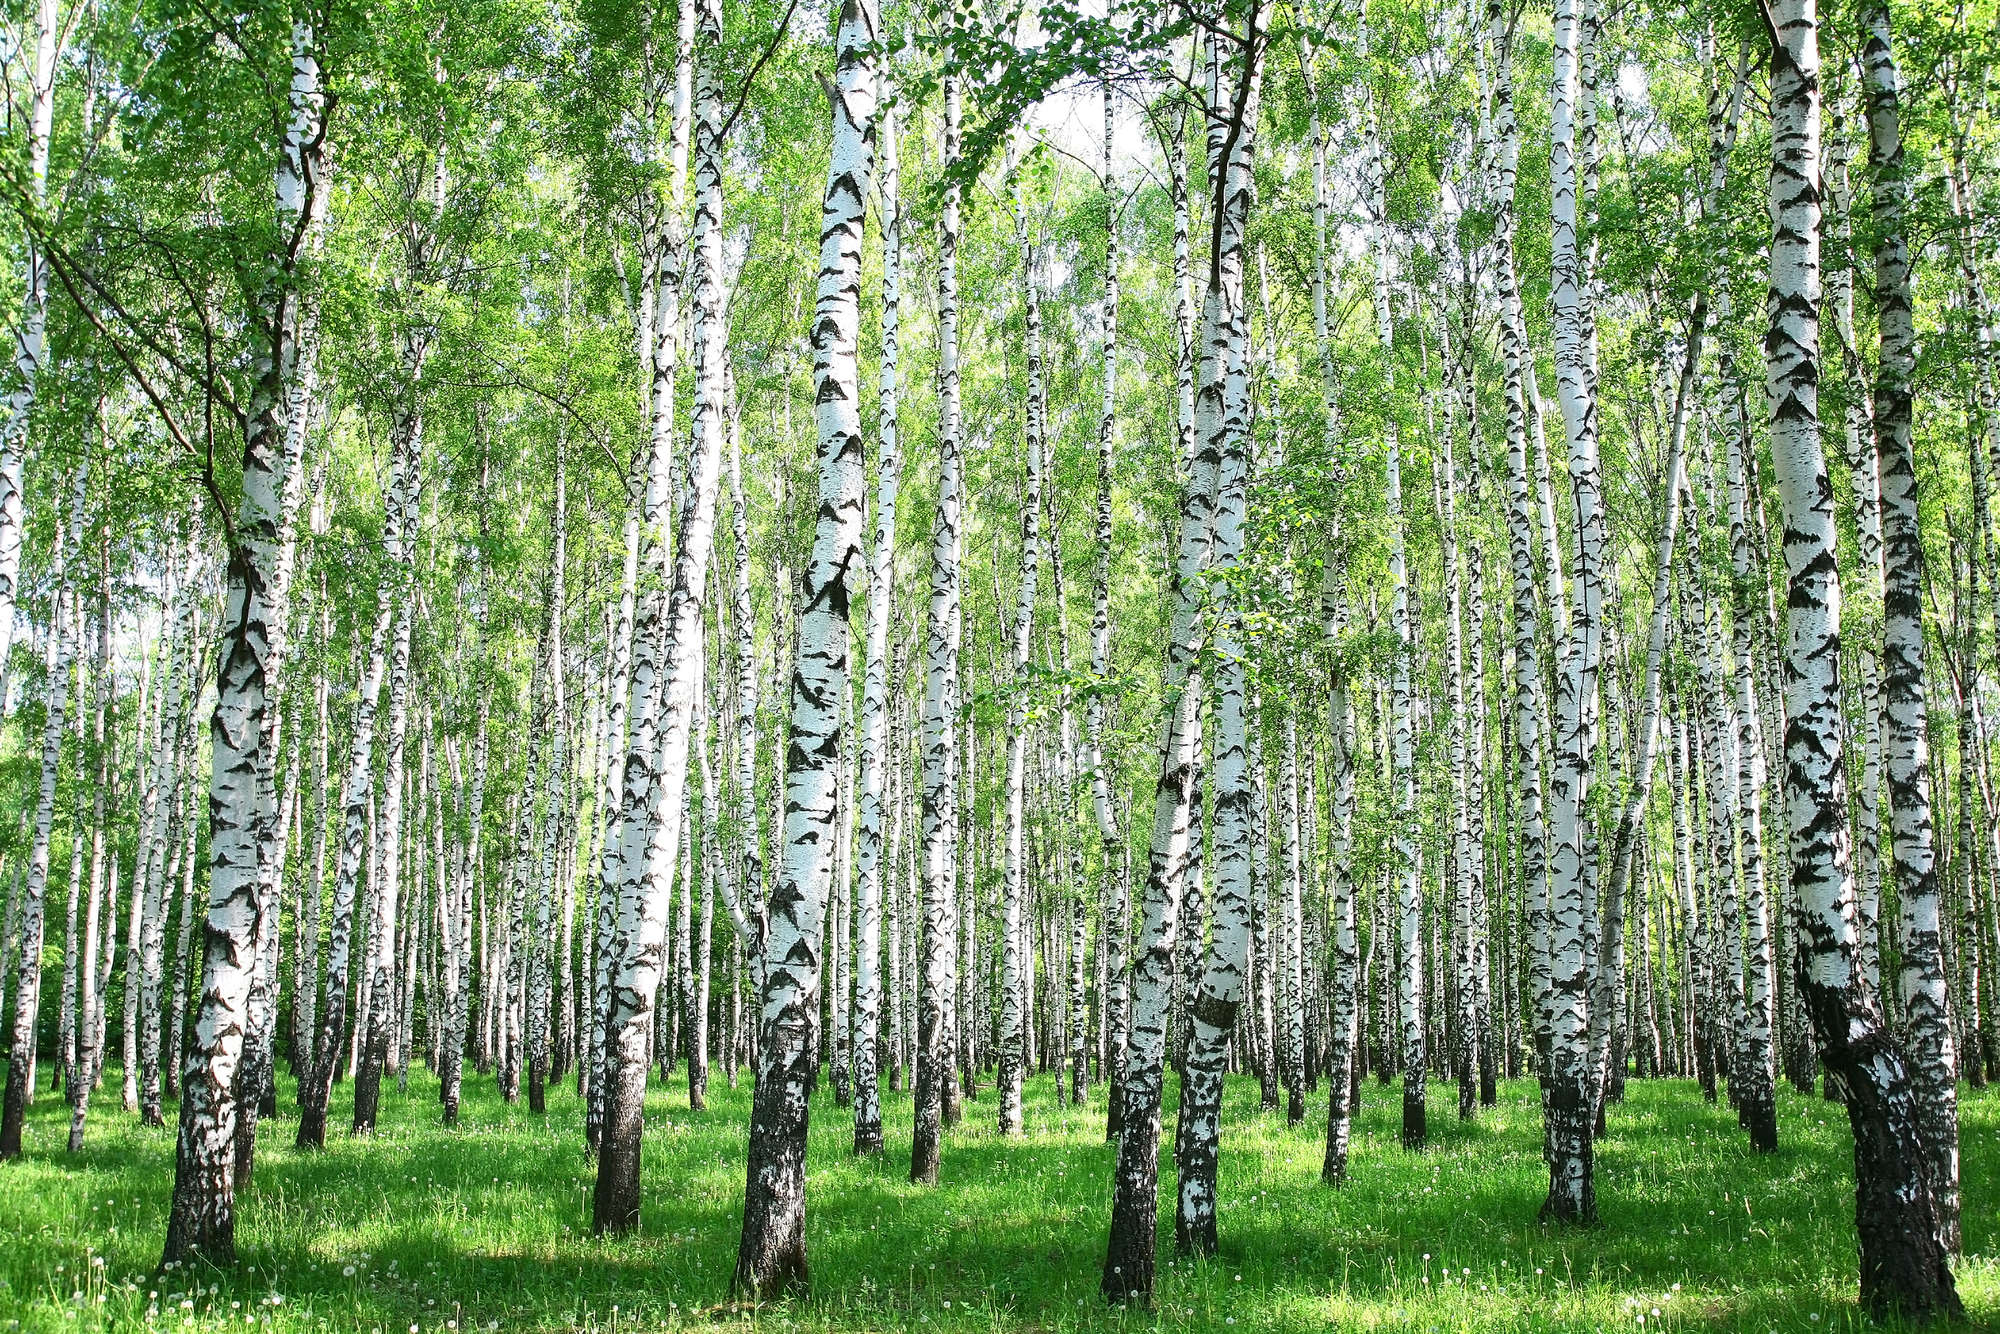             Natur Fototapete Birkenwald Motiv auf Premium Glattvlies
        